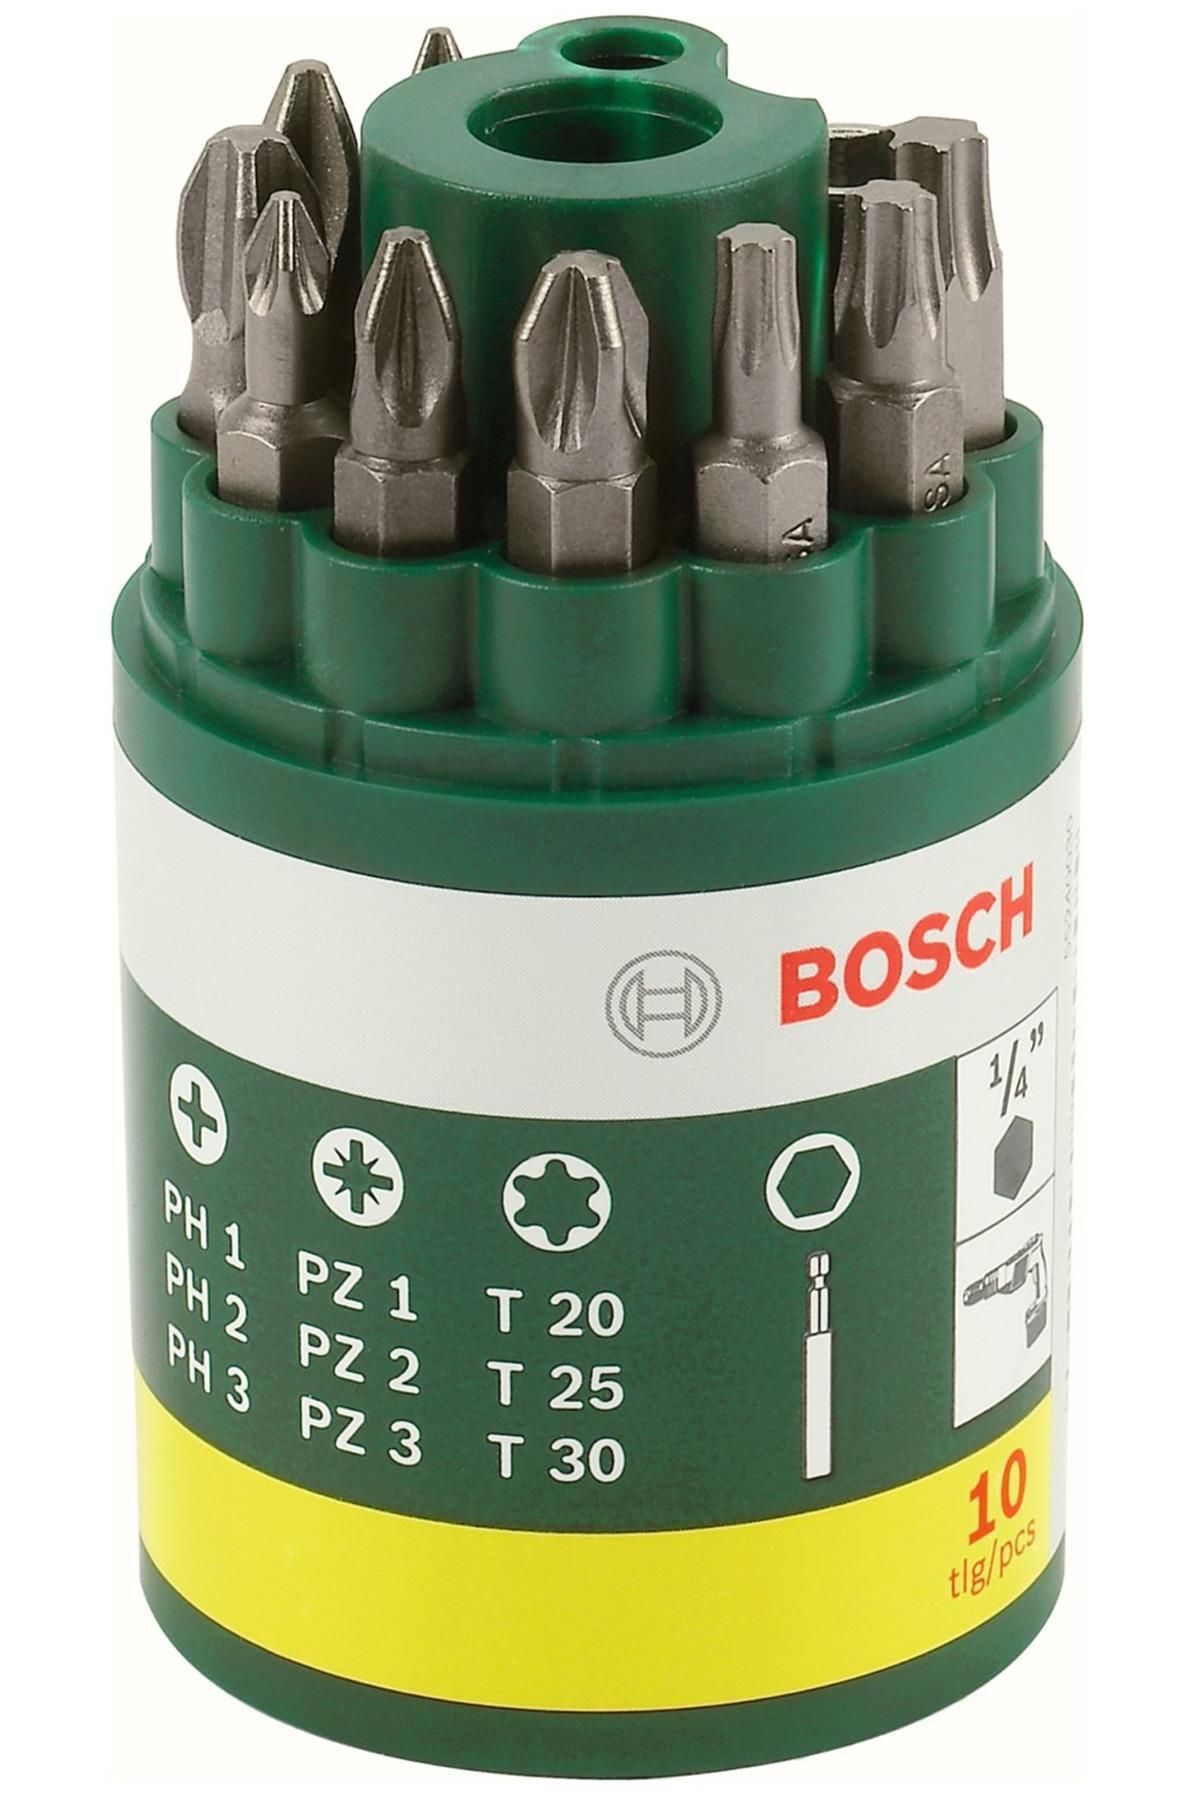 Bosch Dıy 10 Parçalı Vidalama Ucu Seti